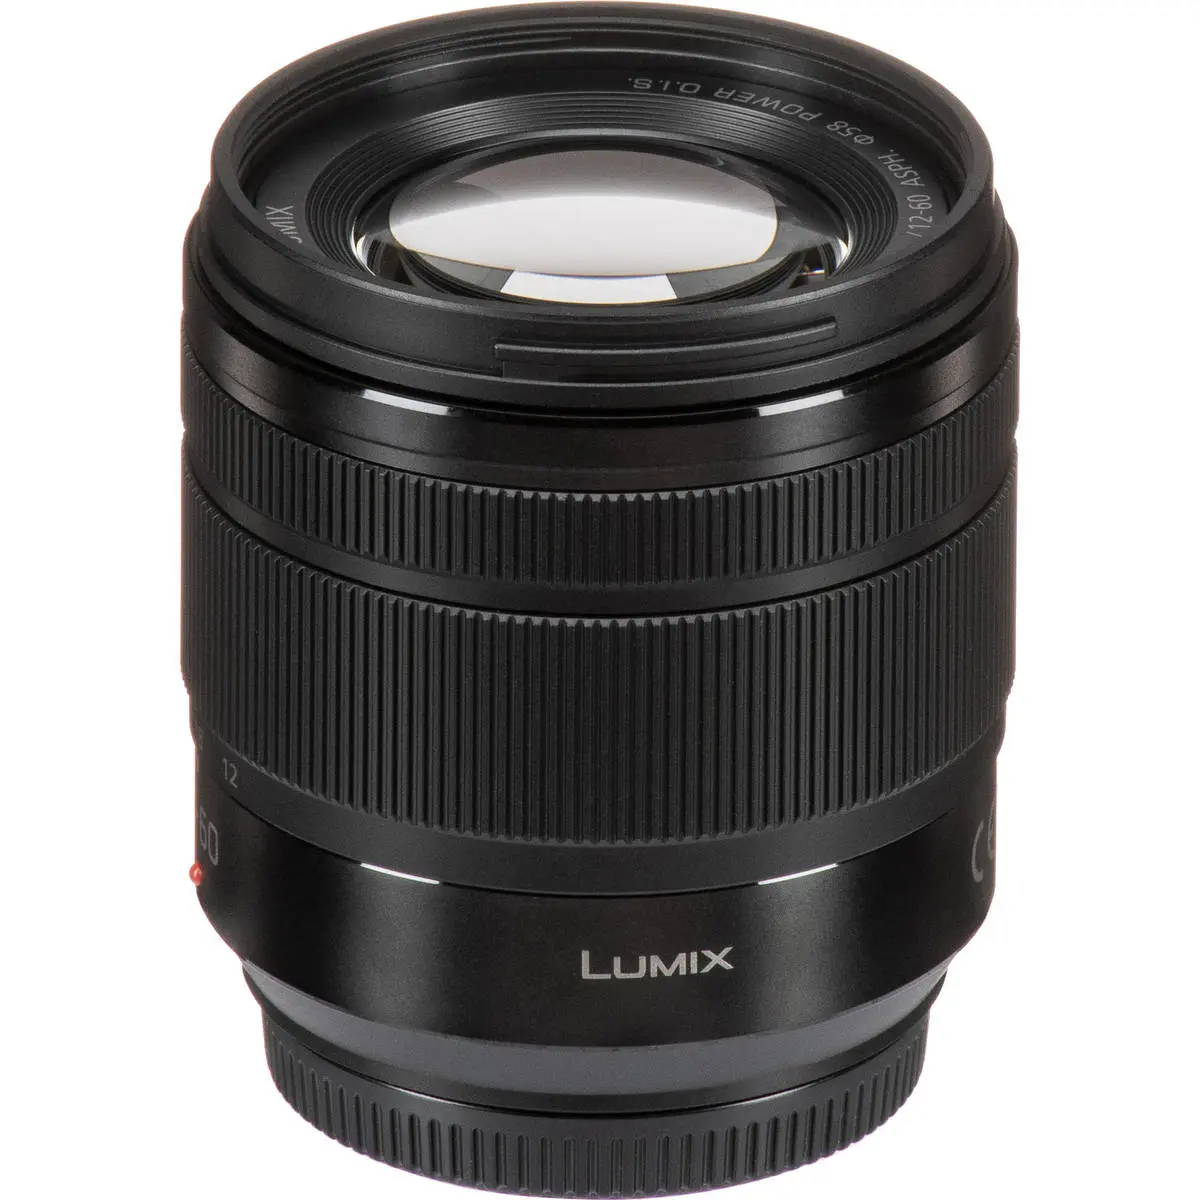 6. Panasonic Lumix G 12-60mm f/3.5-5.6 Asph. OIS Lens